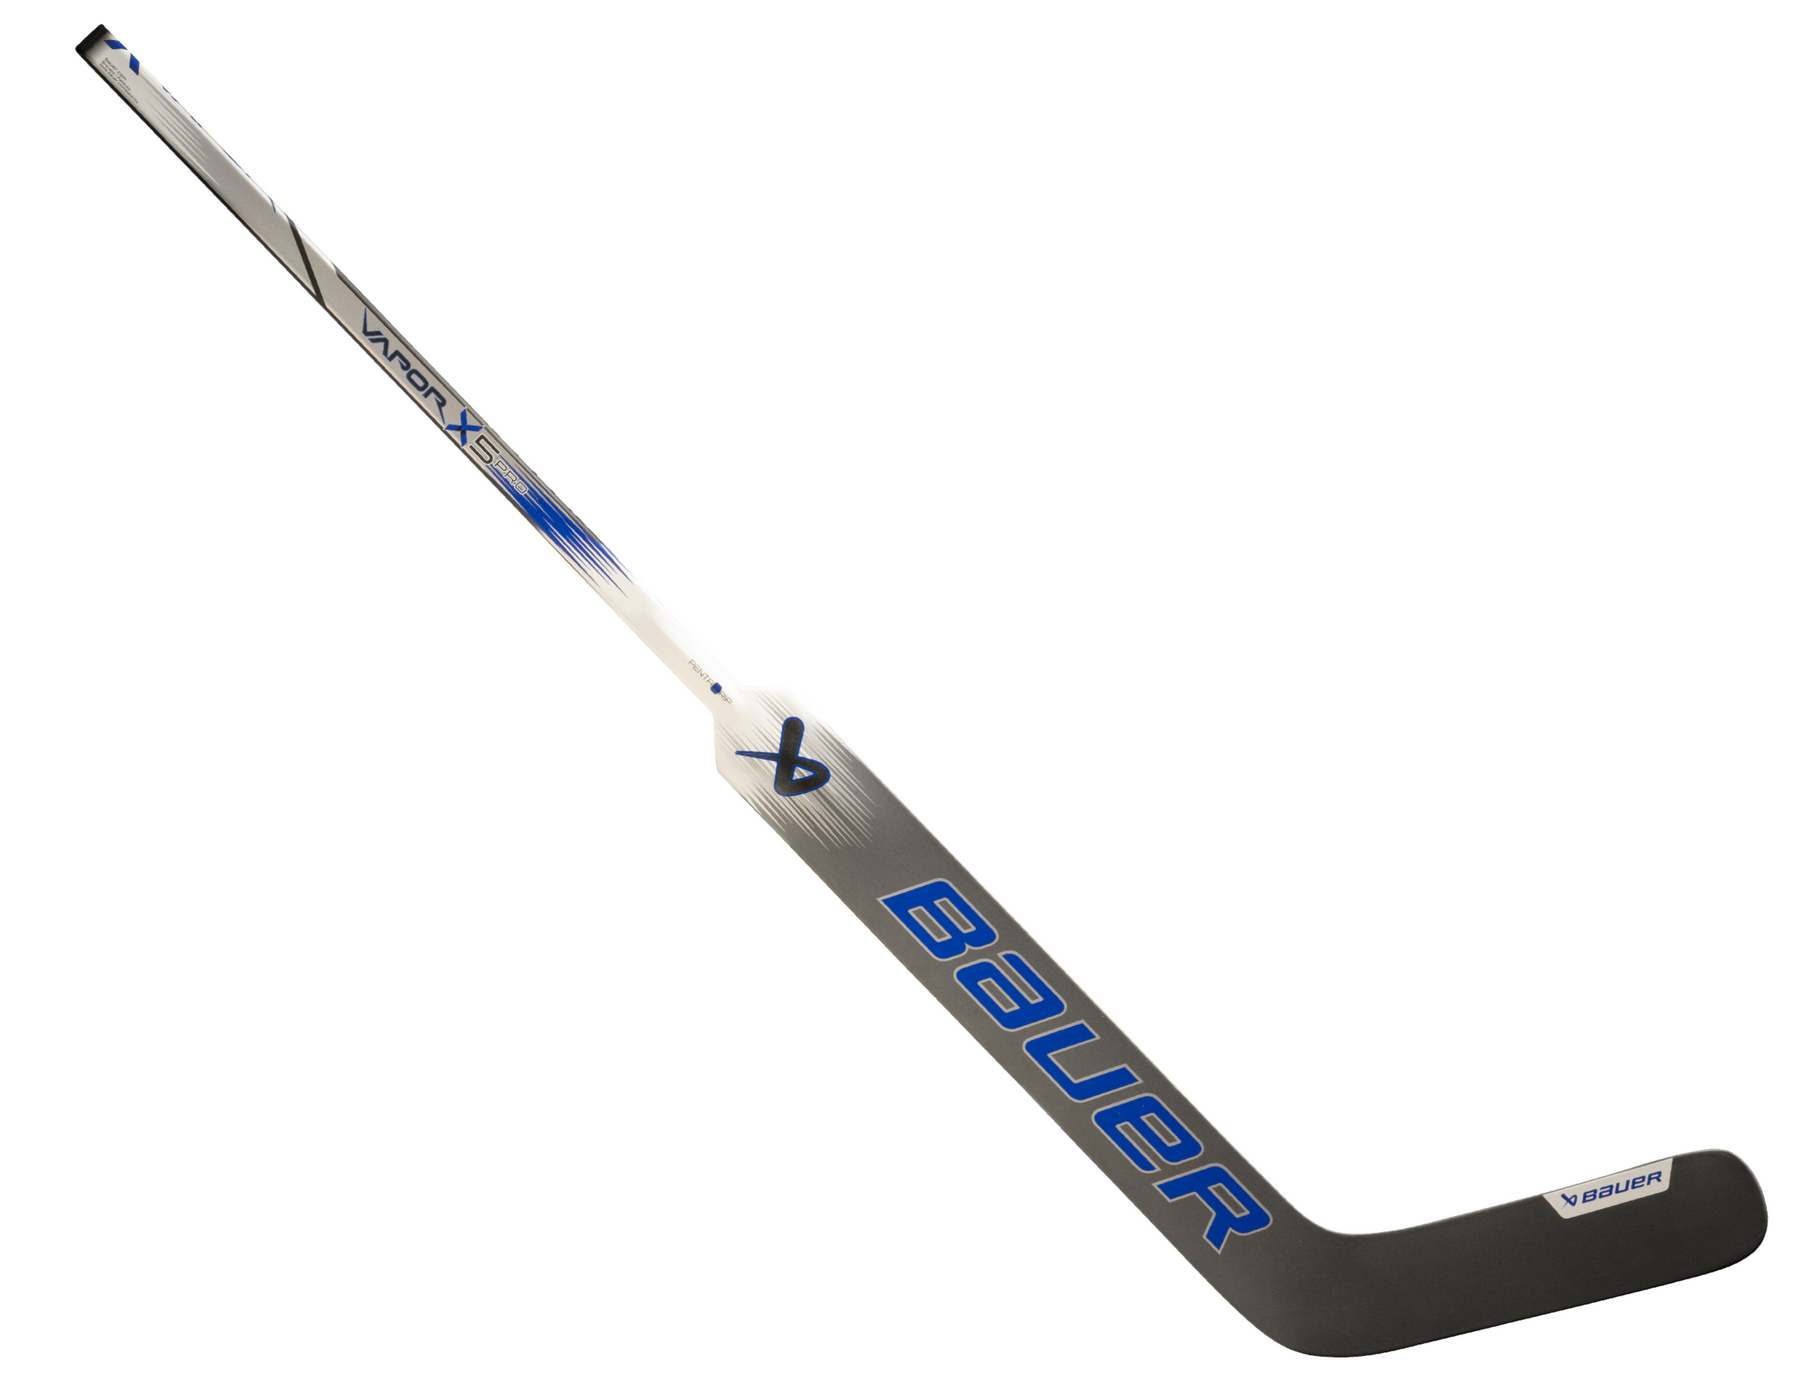 Bauer Vapor X5 Pro Intermediate Goalie Stick (Blue)